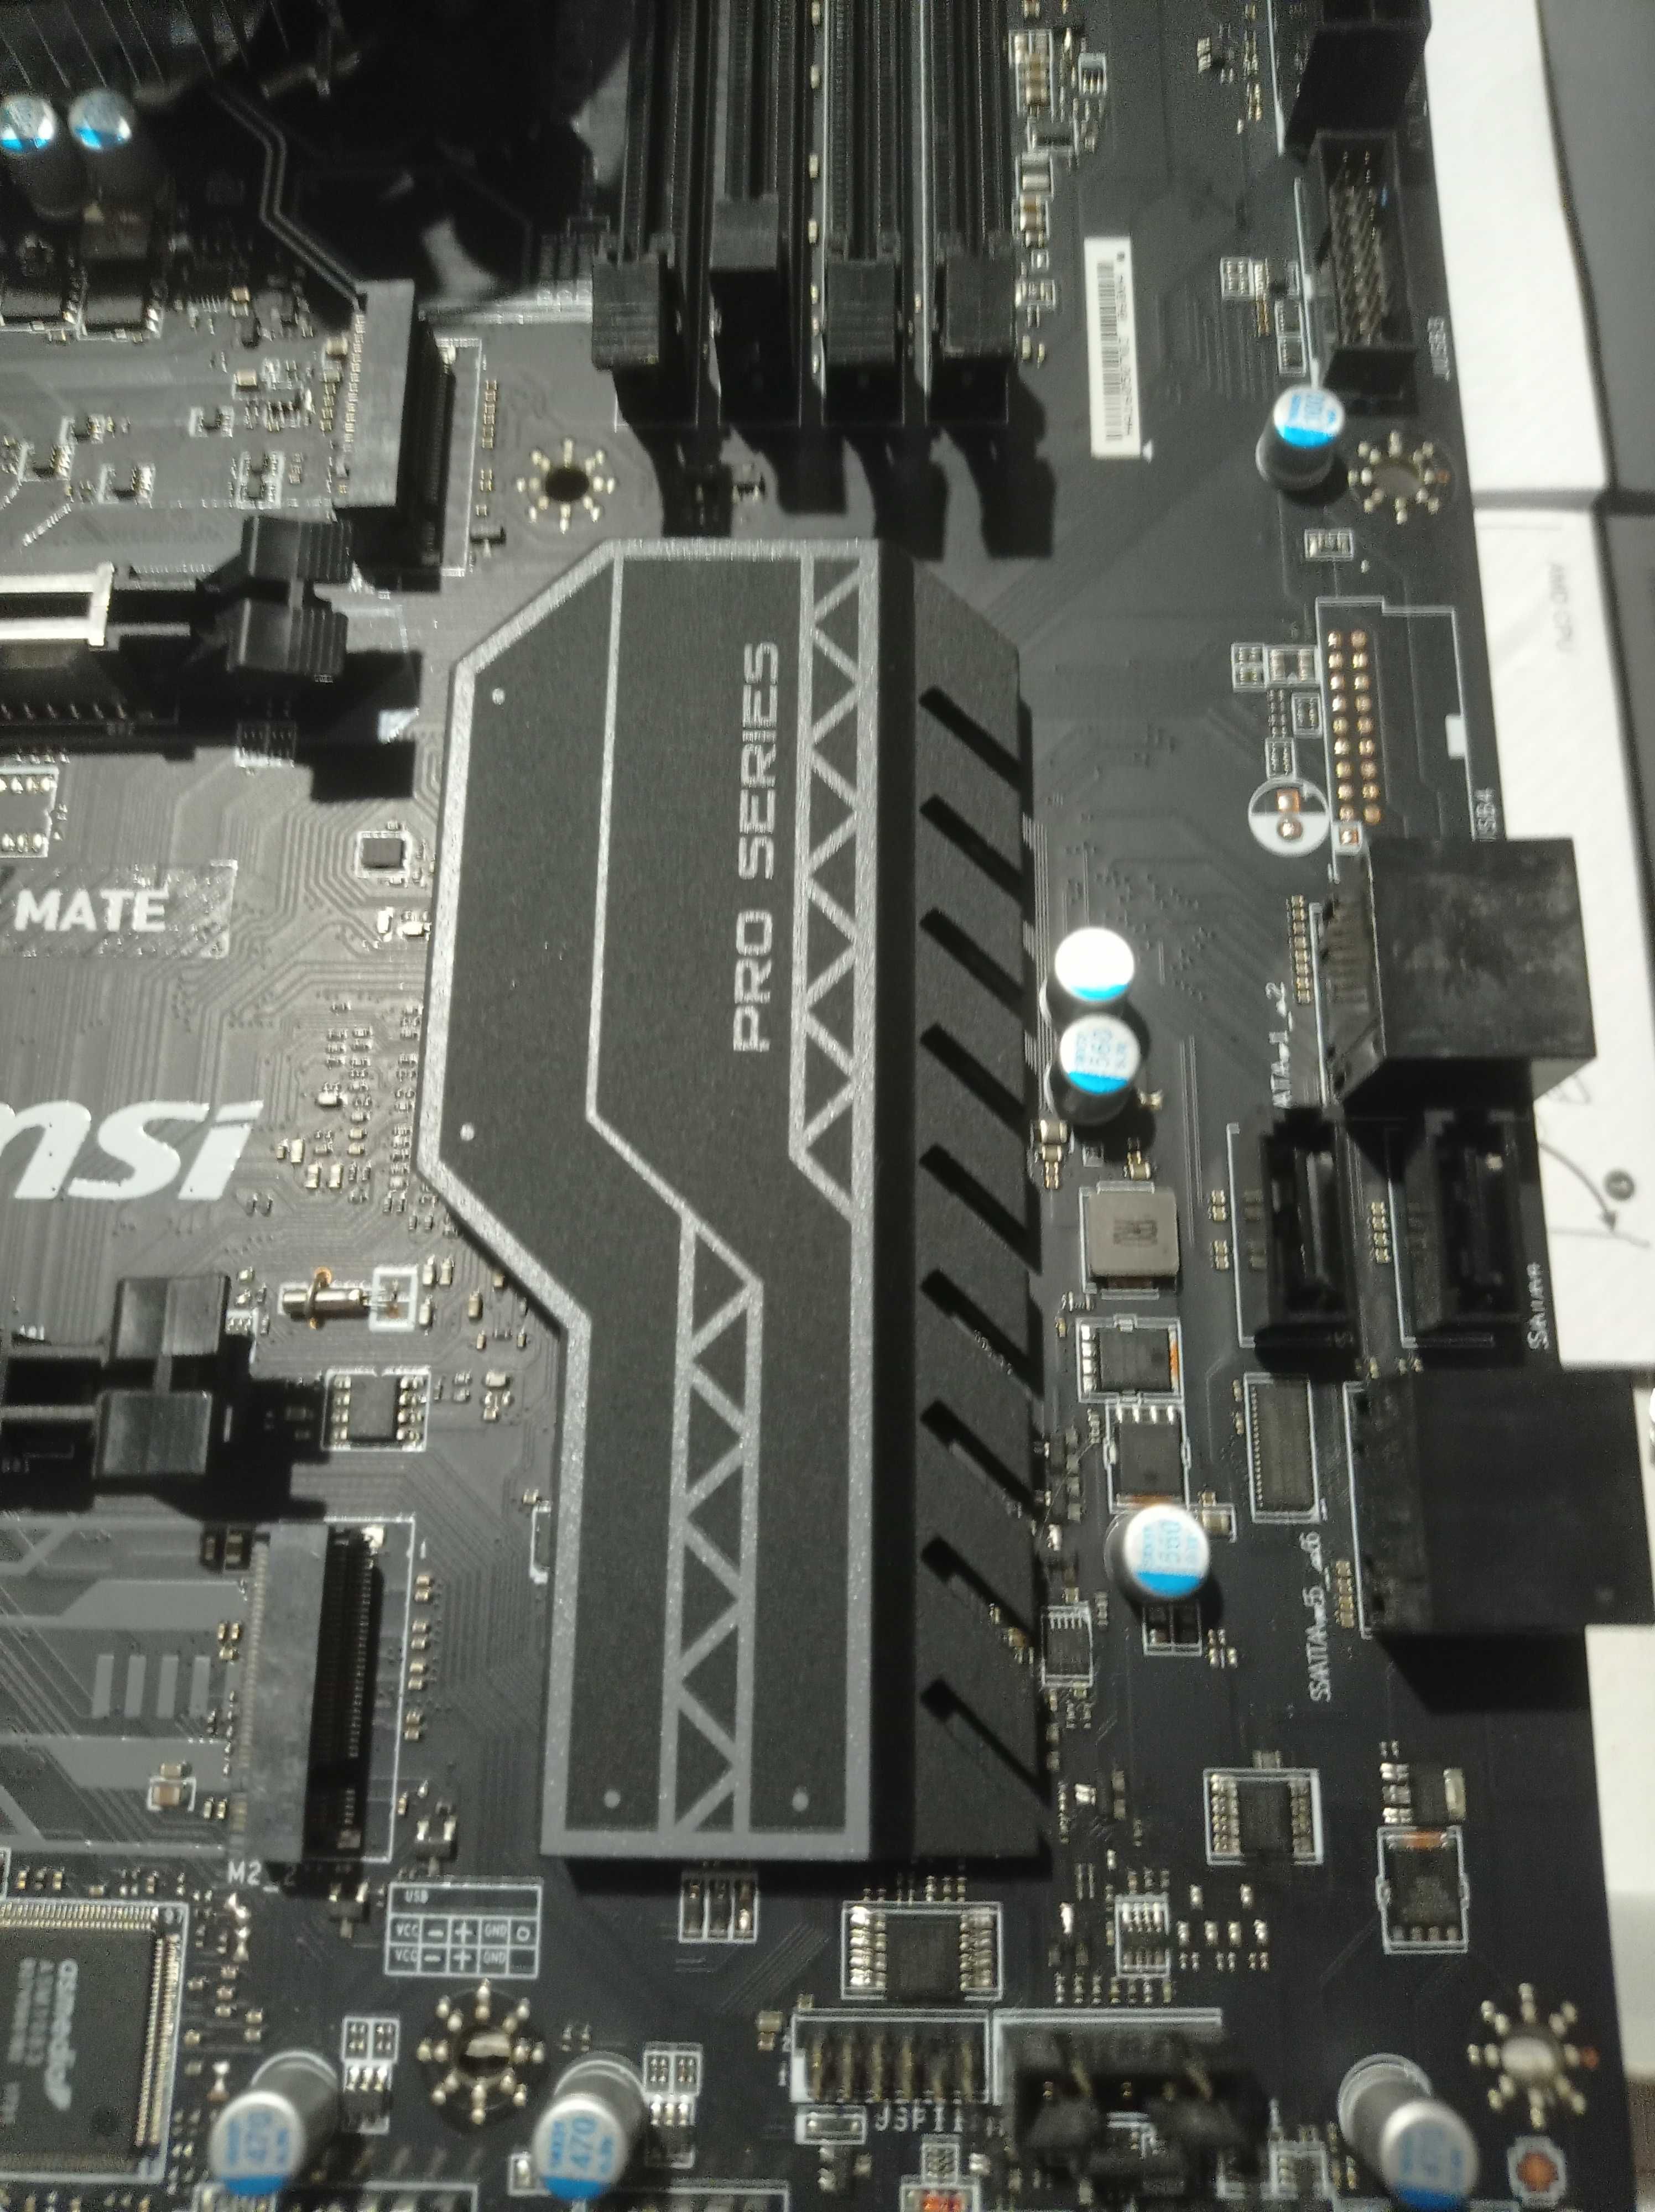 MSI B250 PC Mate +Intel Core i5 i57400